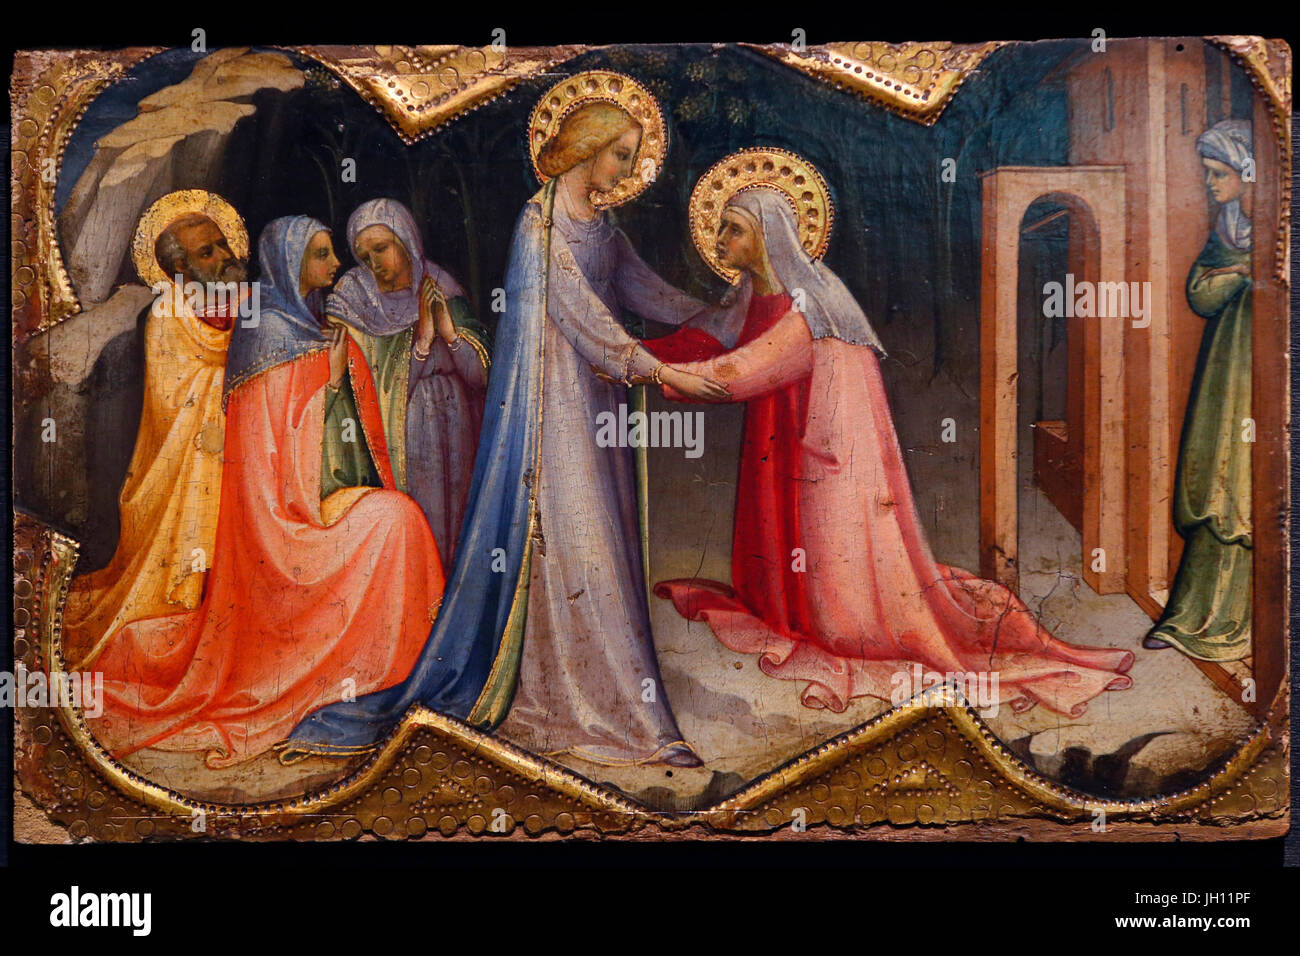 The Courtauld Gallery. Lorenzo Monaco. Predella Panel - The Visitation. Around 1409. Tempera on panel. United kingdom. Stock Photo